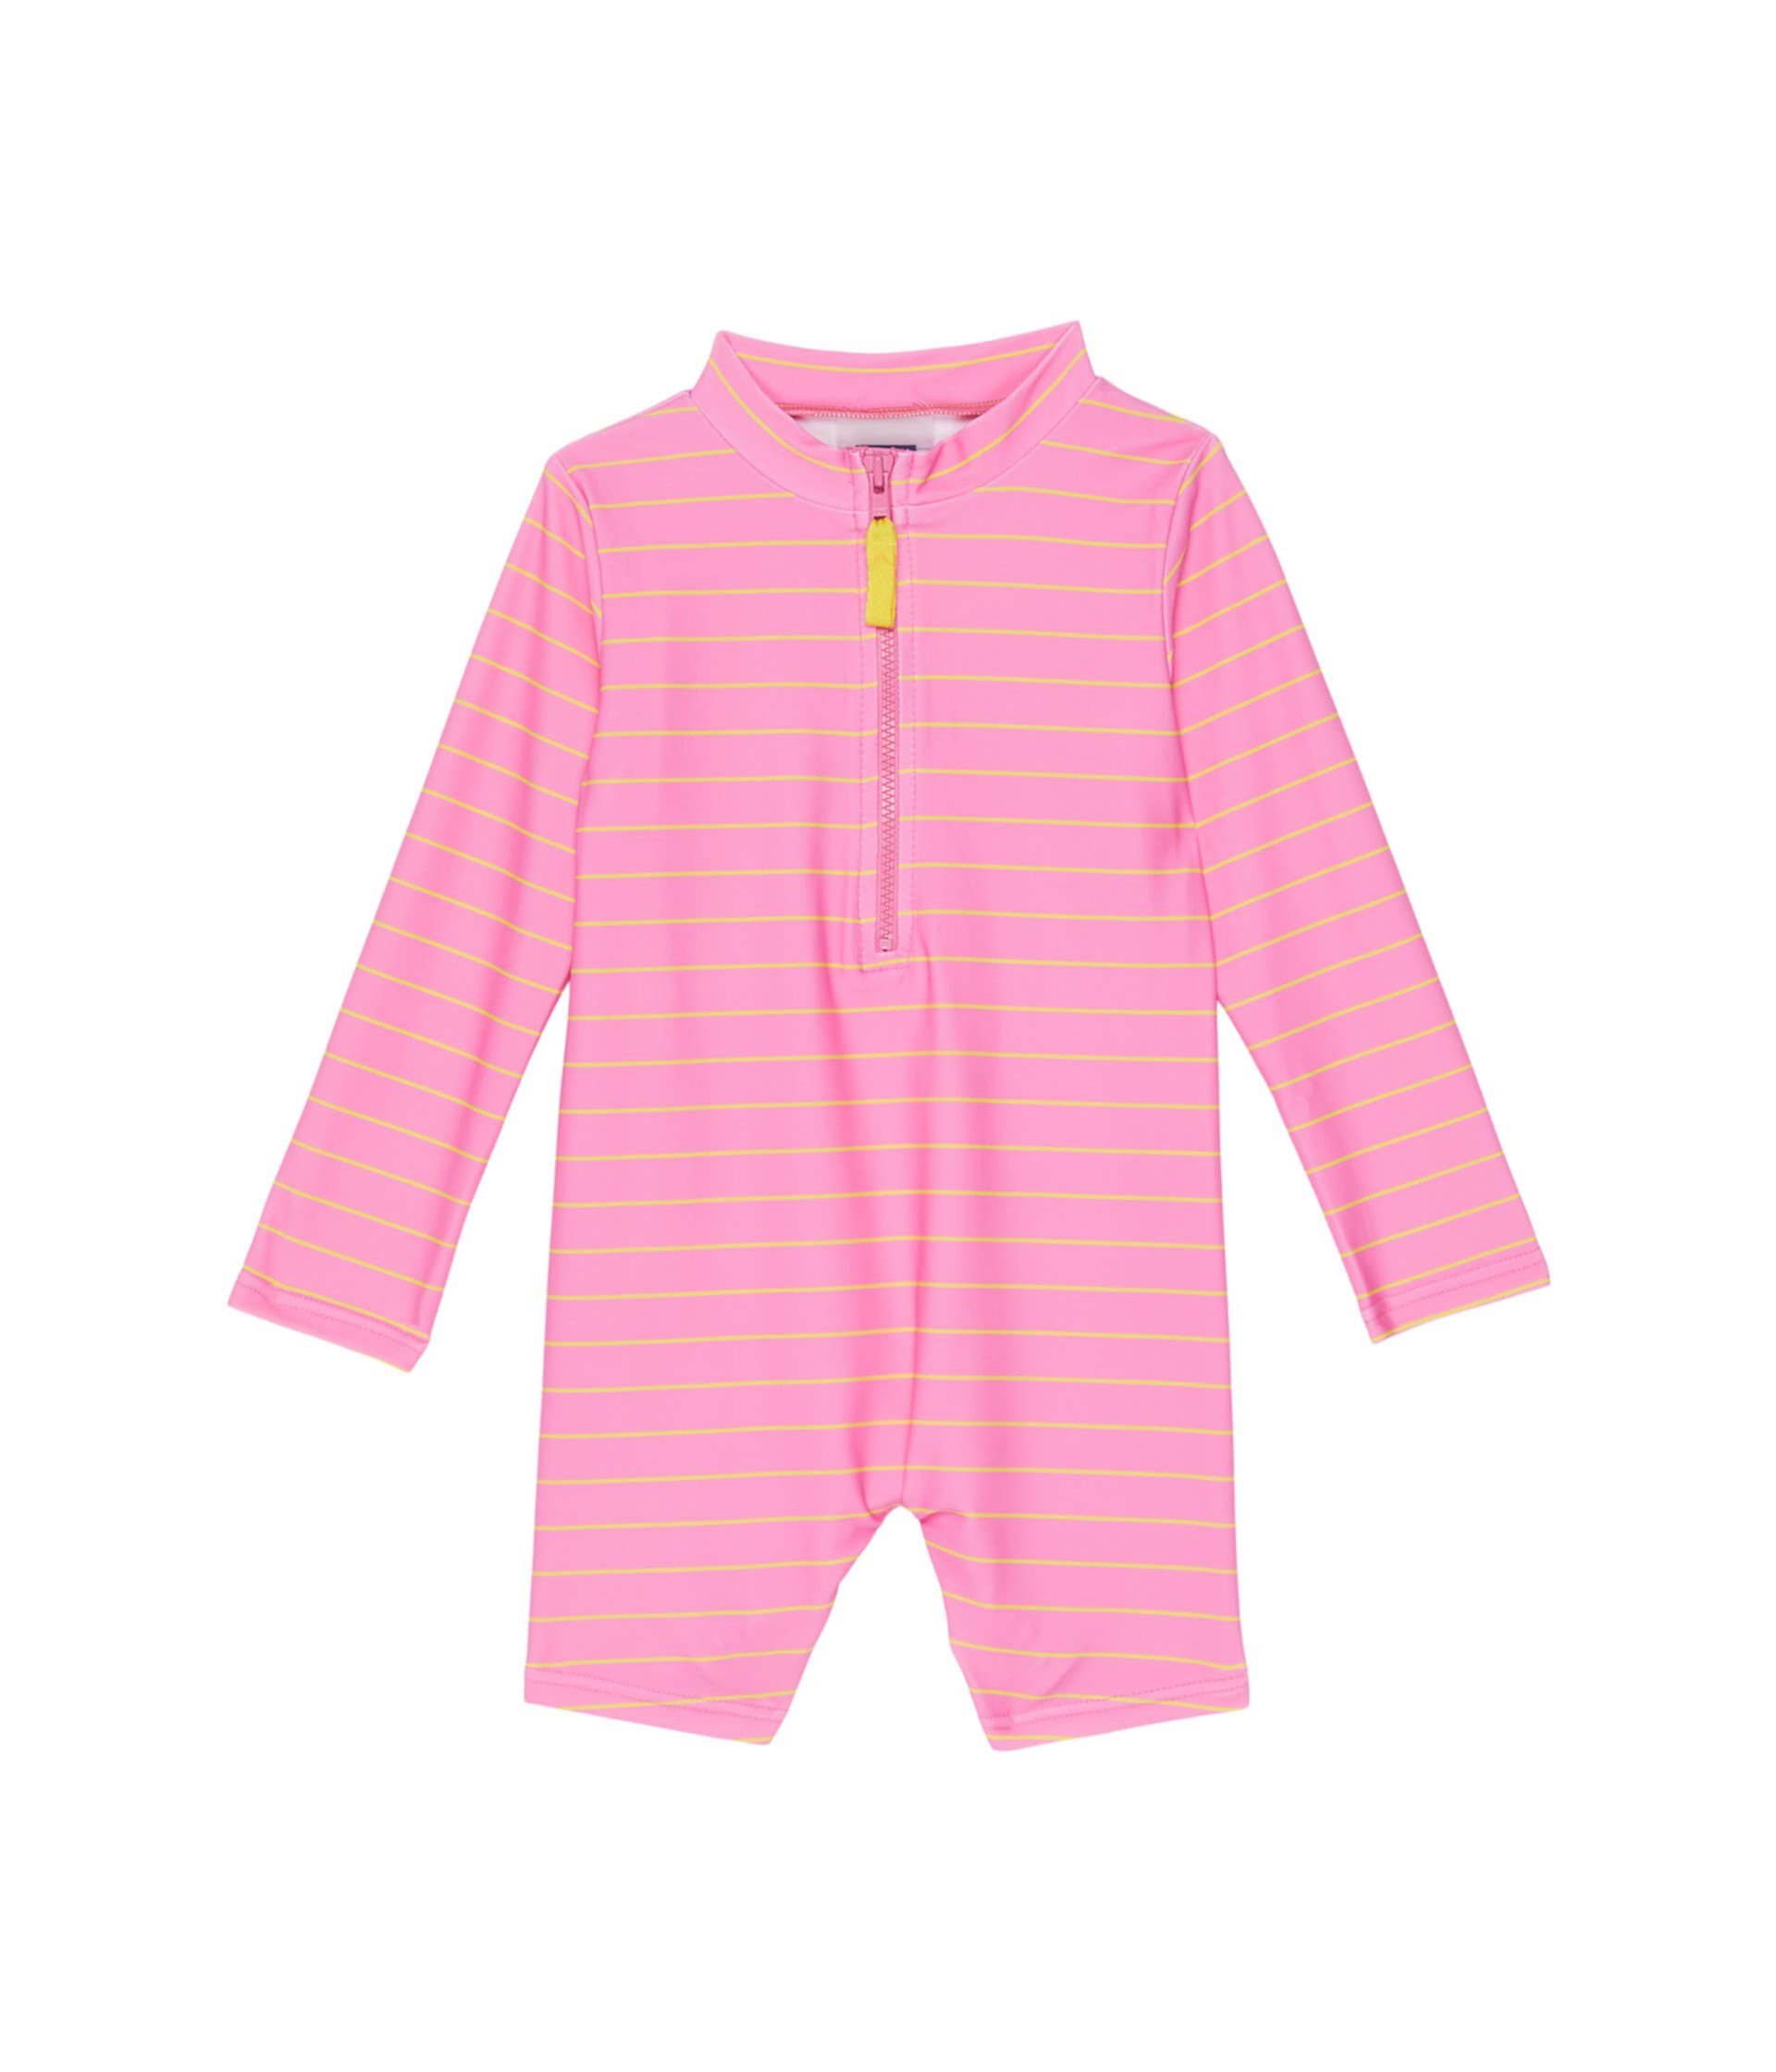 Pretty in Pink Rashguard Sun Suit Upf50+ (для младенцев/малышей) Toobydoo